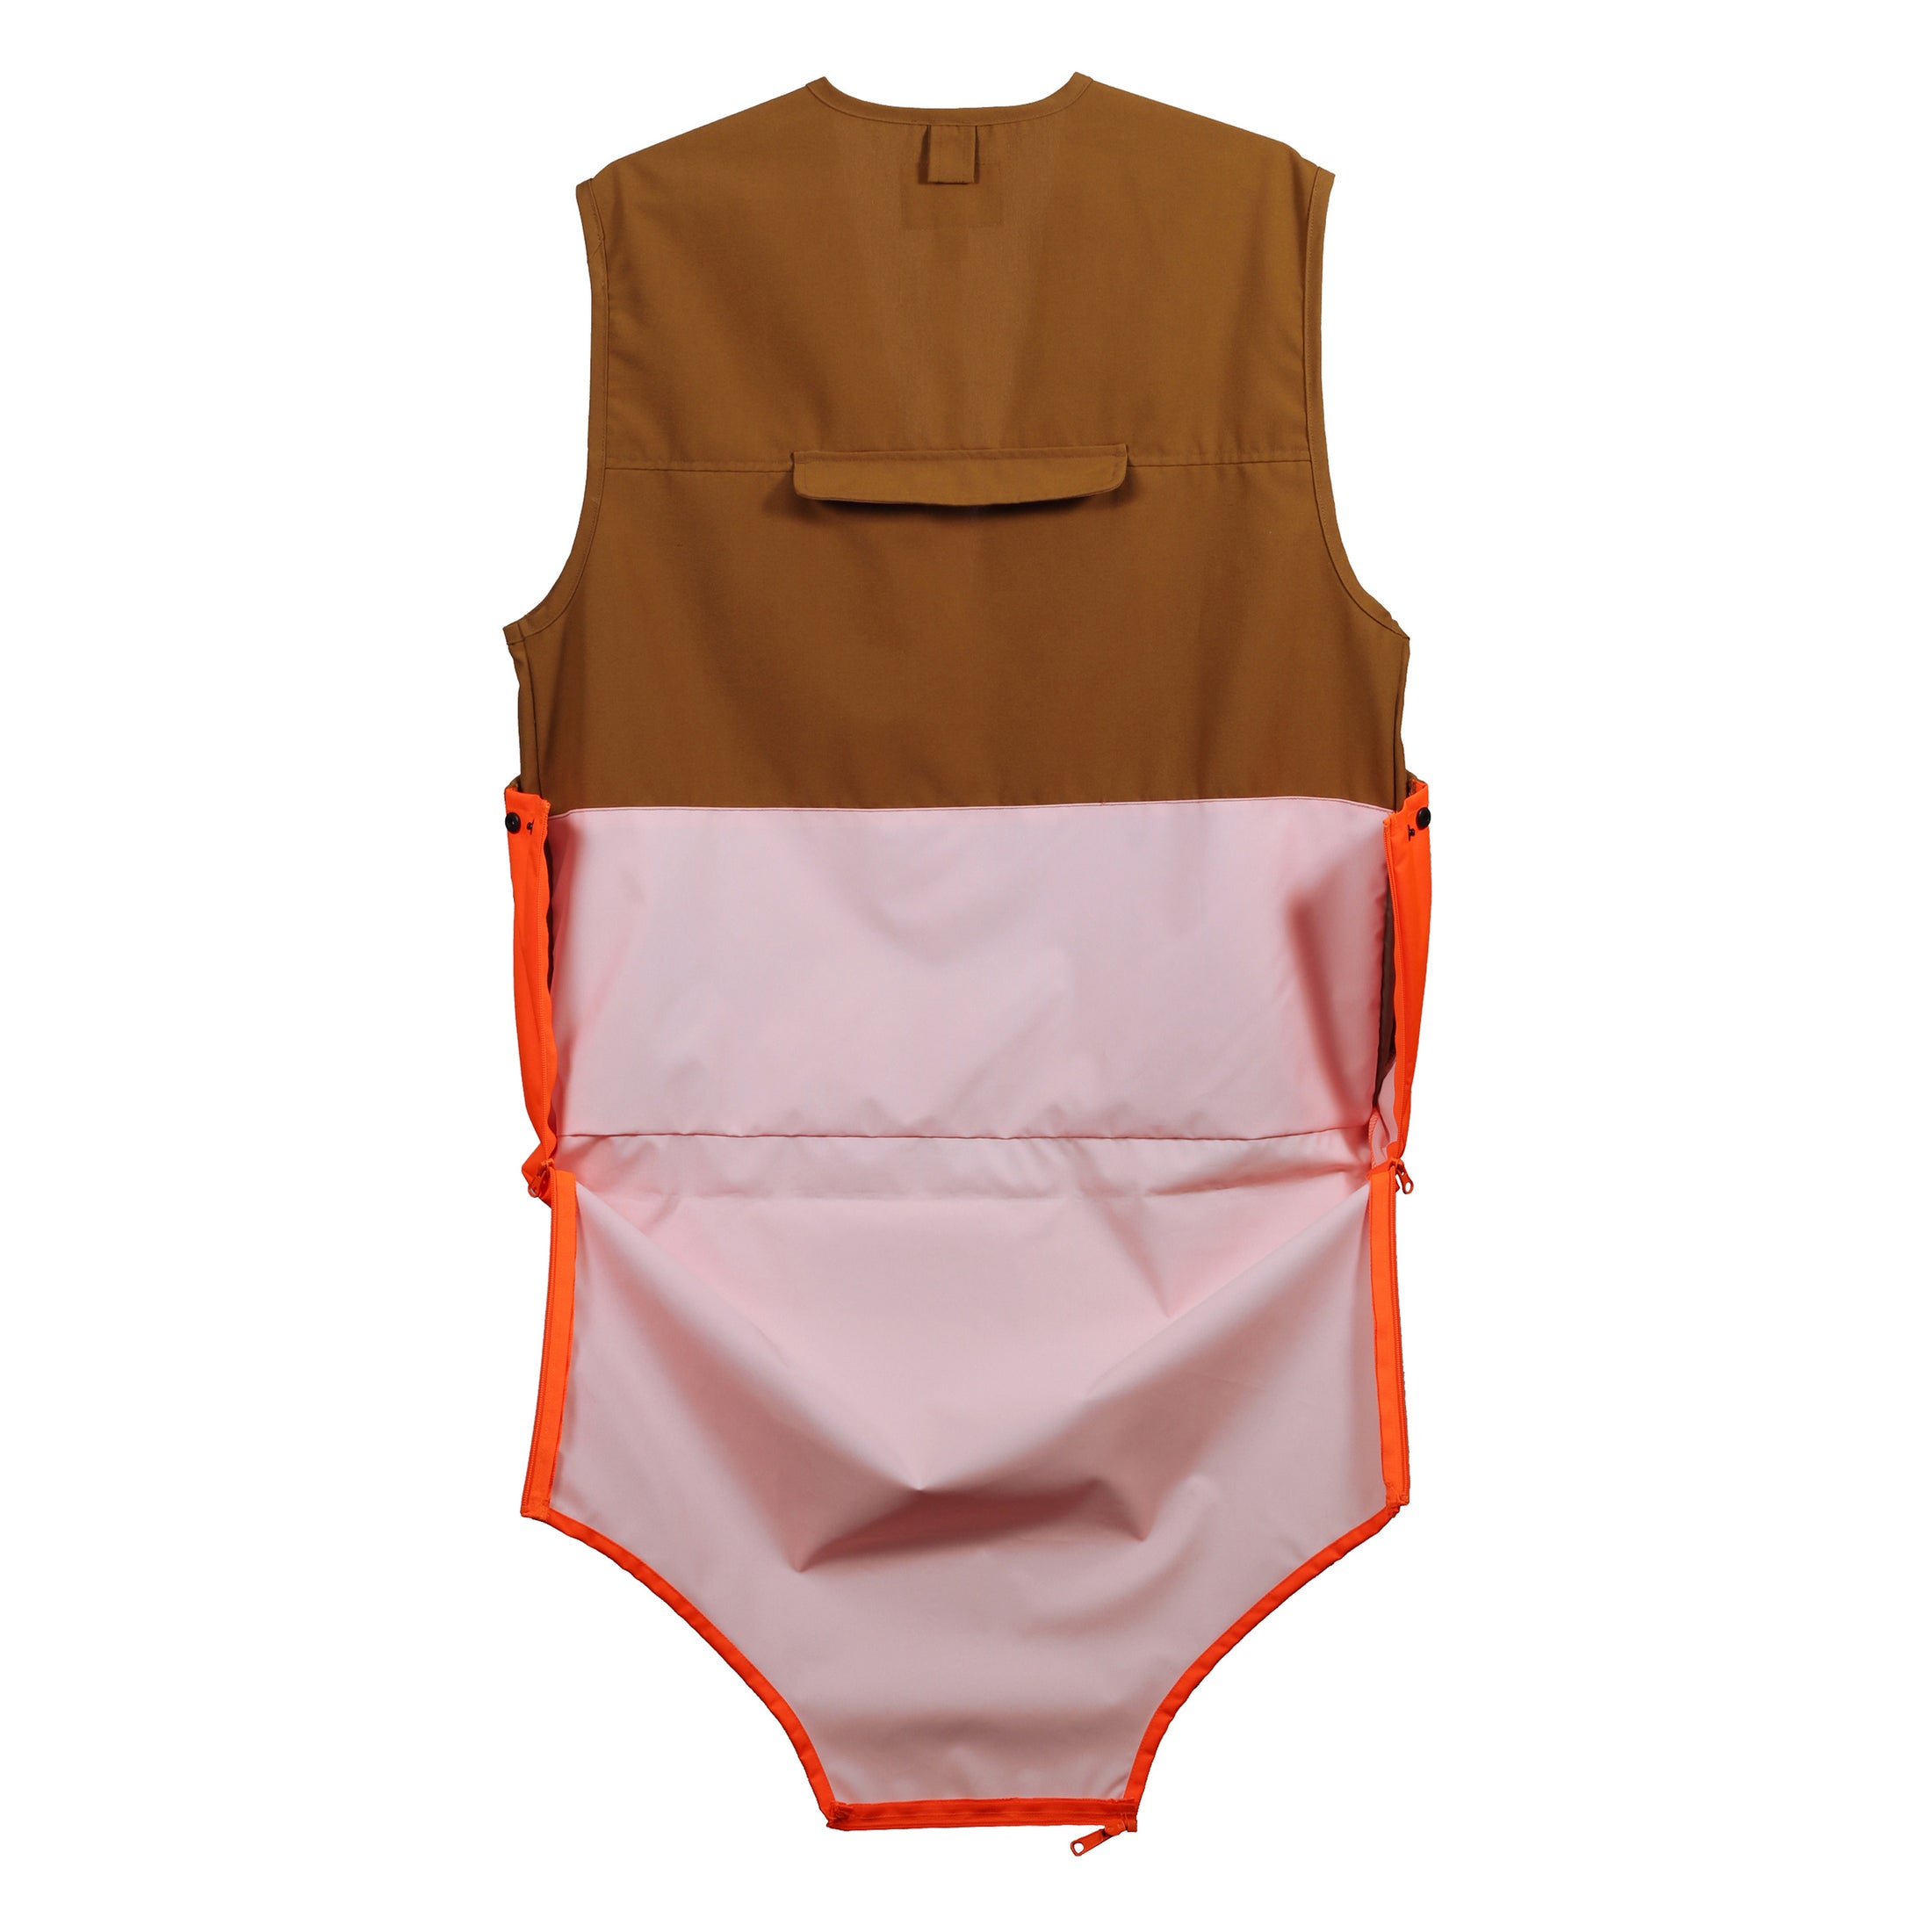 gamehide Outfitters Upland Vest drop down back (marsh brown/orange)